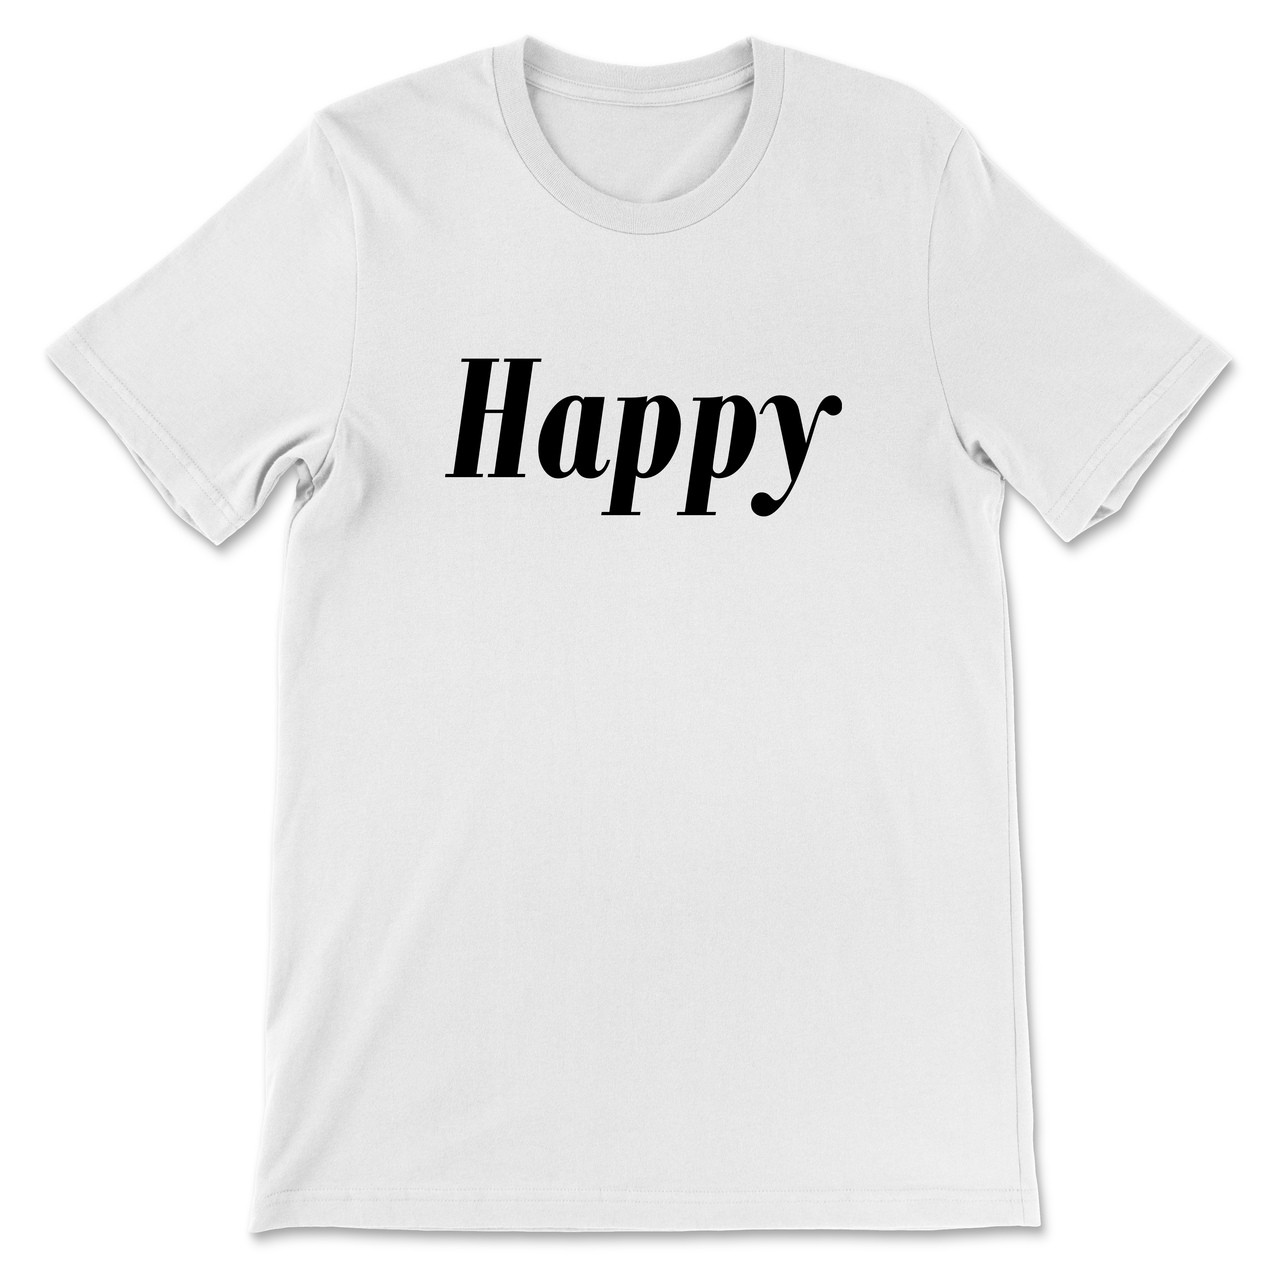 Happy T Shirt Subliworks